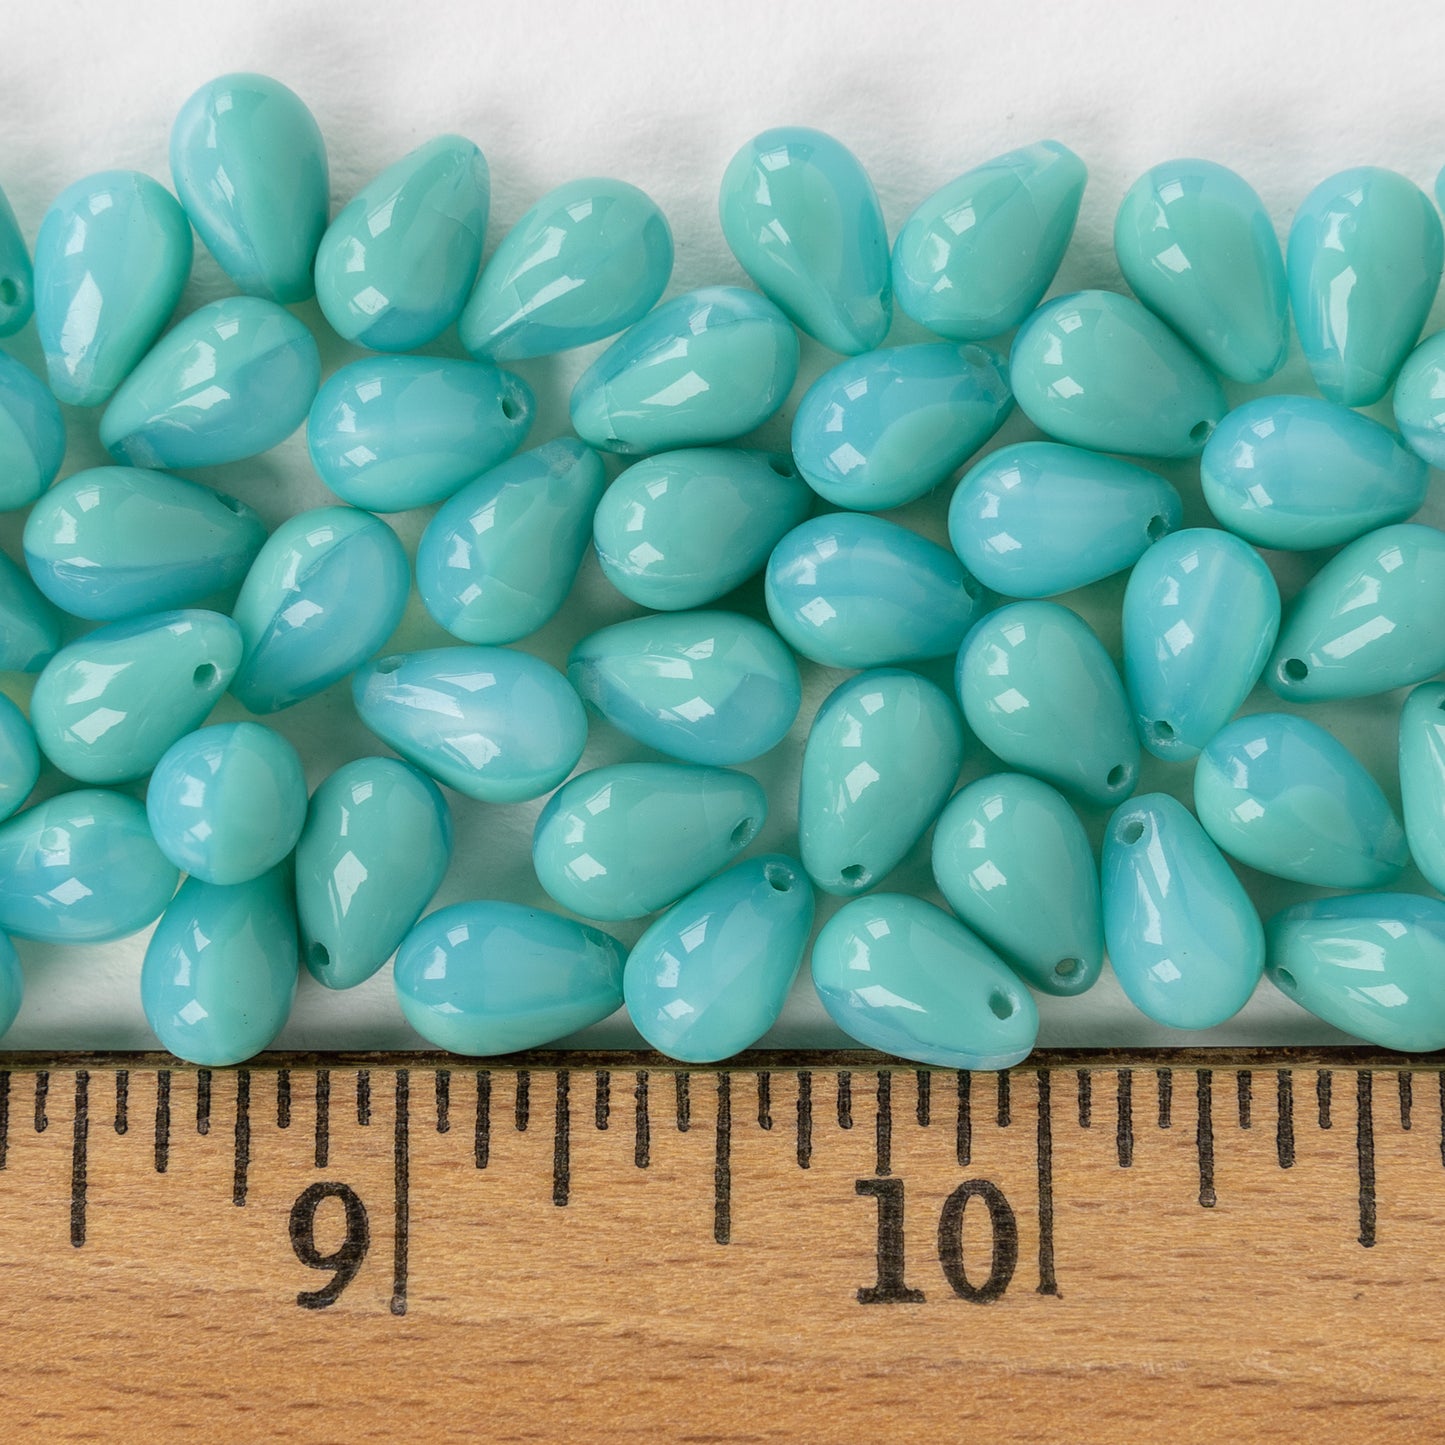 6x9mm Glass Teardrop Beads - Opaque Silky Turquoise - 50 Beads